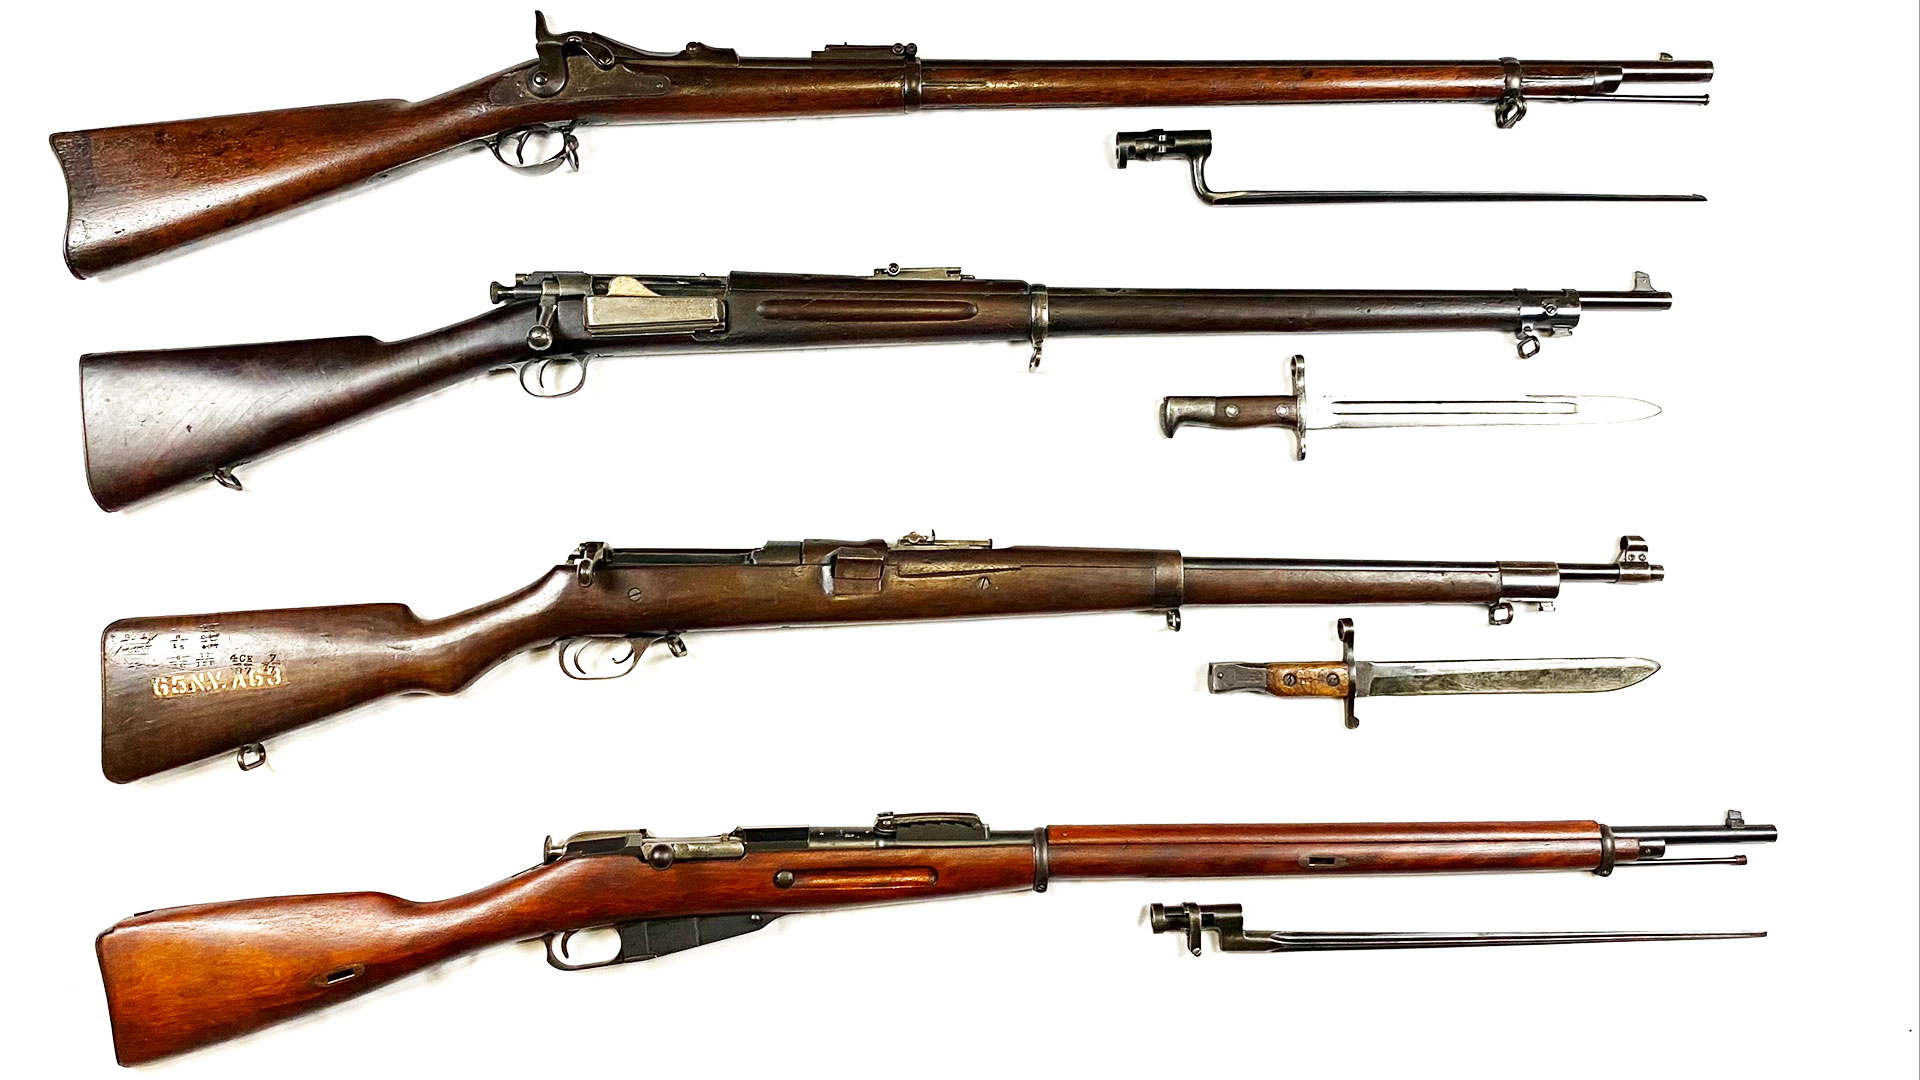 Considerations for Handloading World War II-Vintage Rifle Am